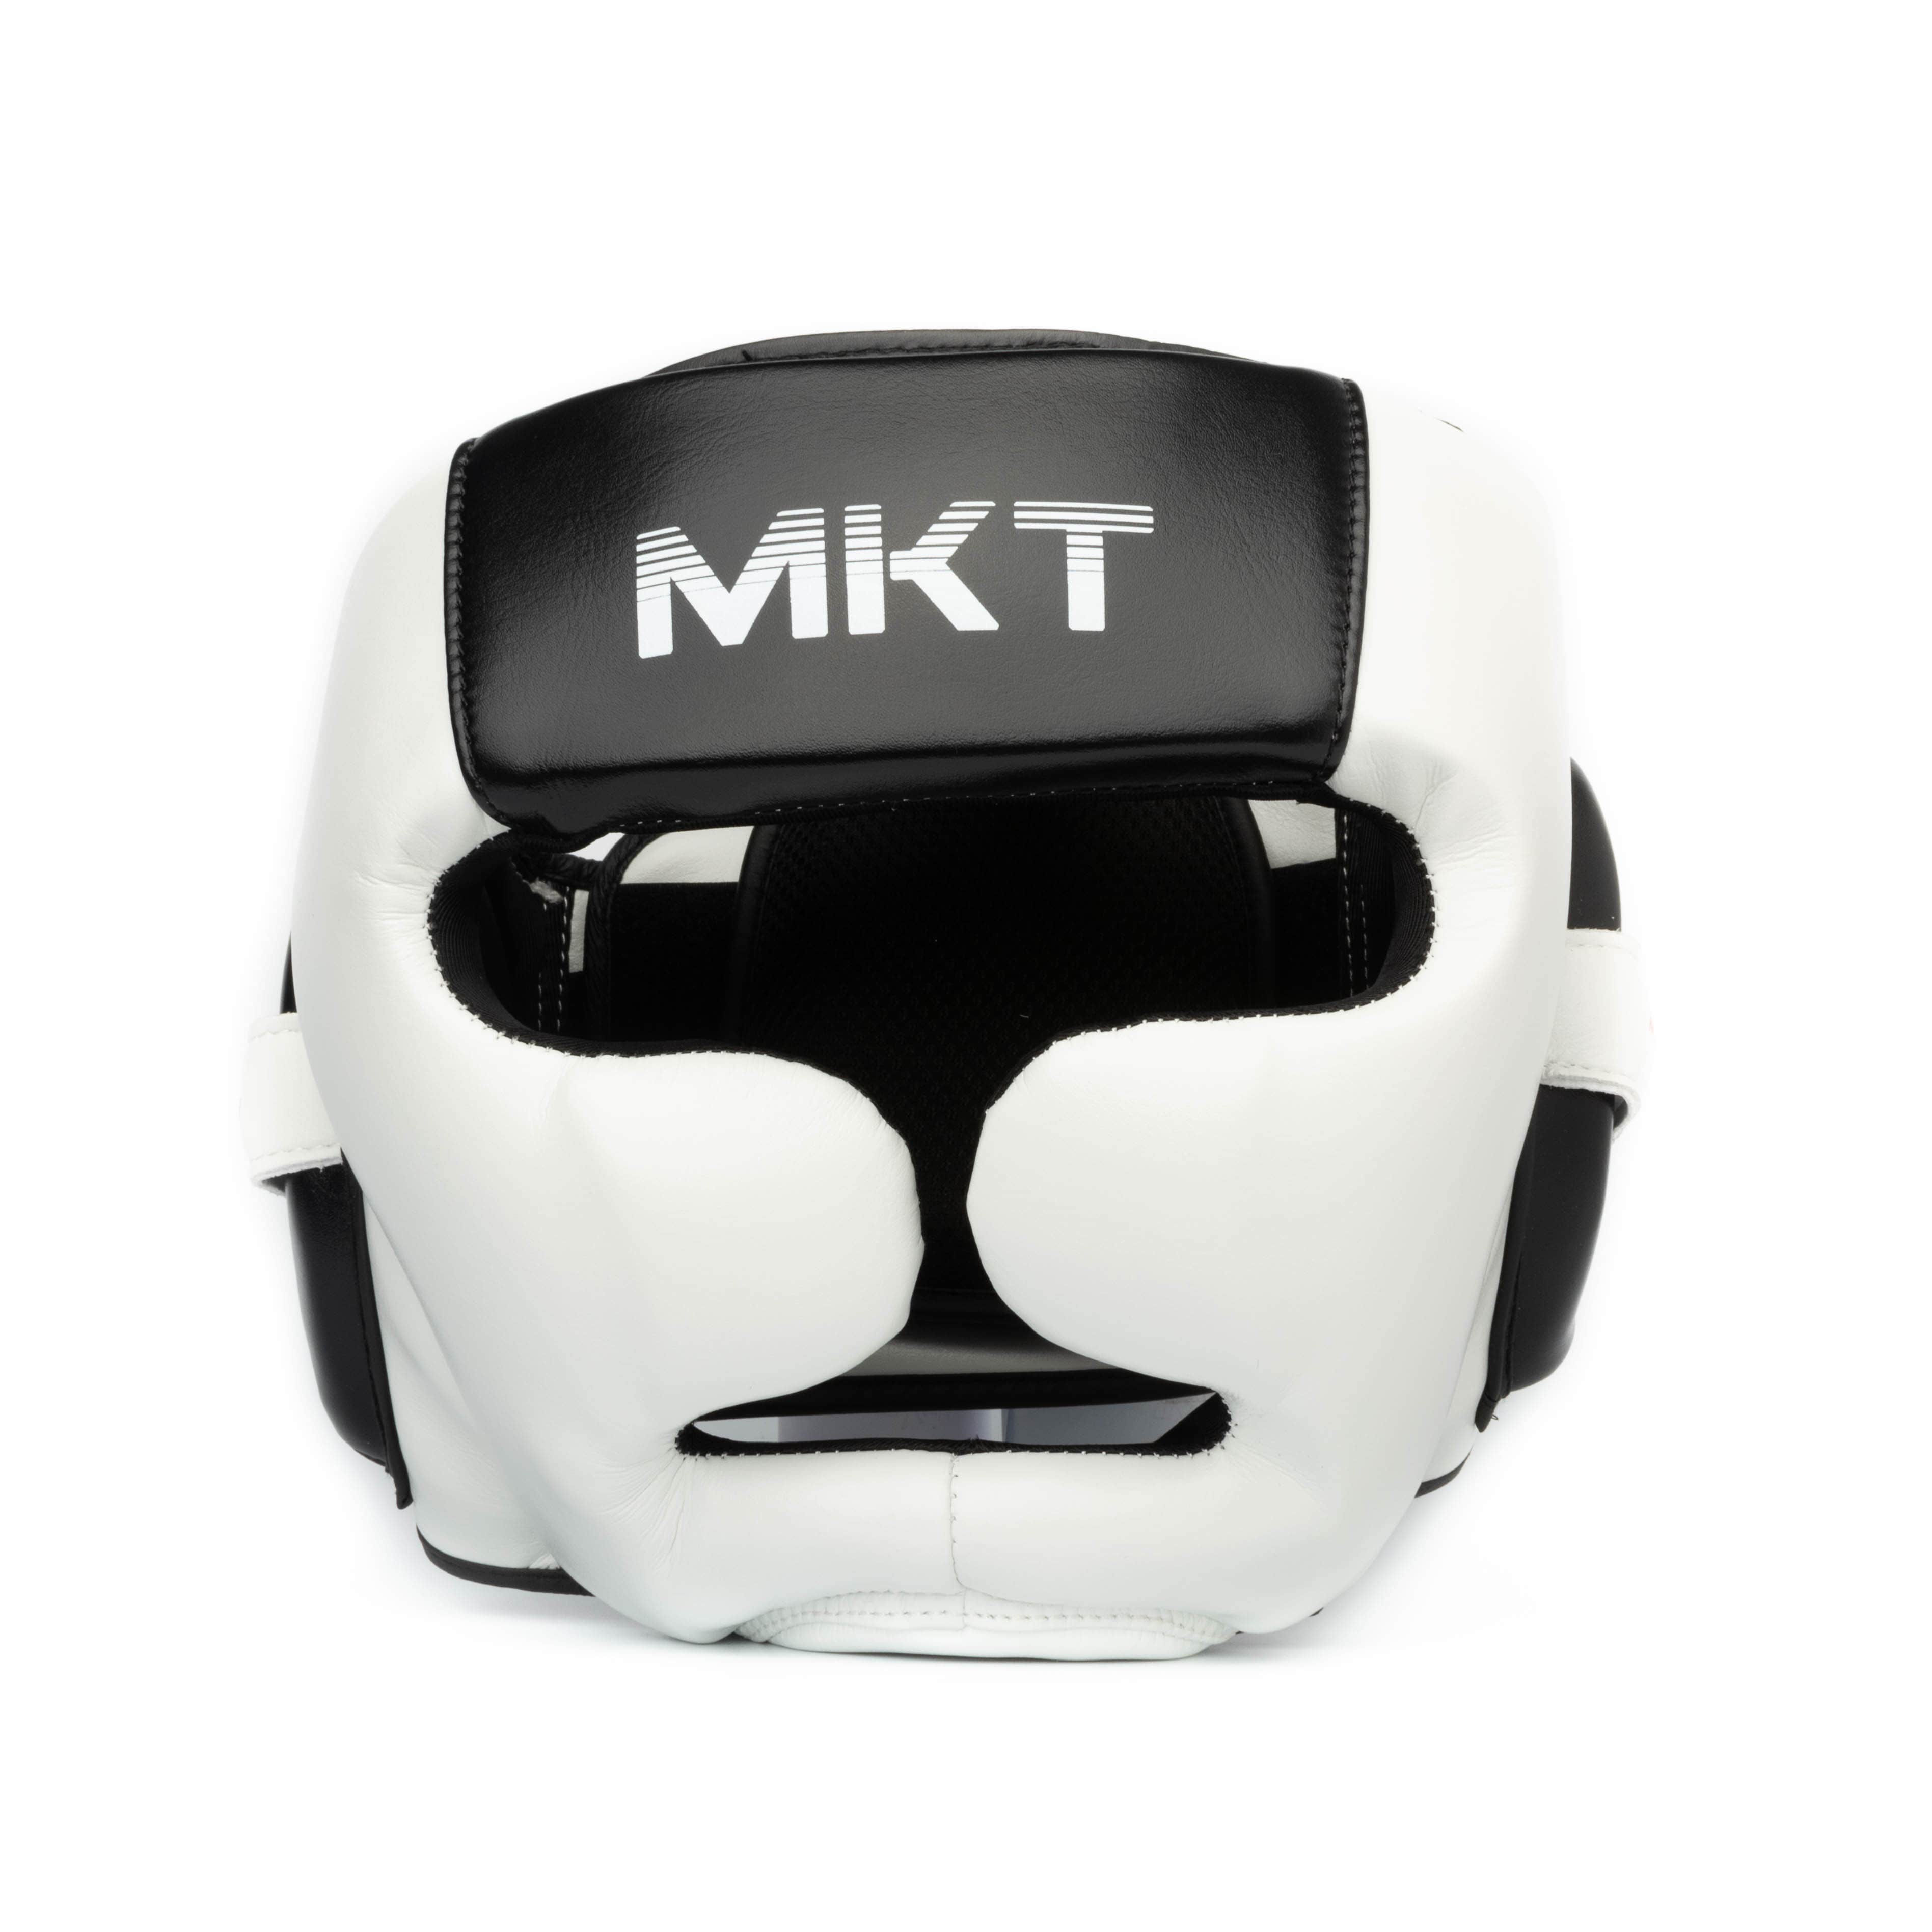 Cabezal de Boxeo Makoto Pro Blanco - 100% Microfibra Premium